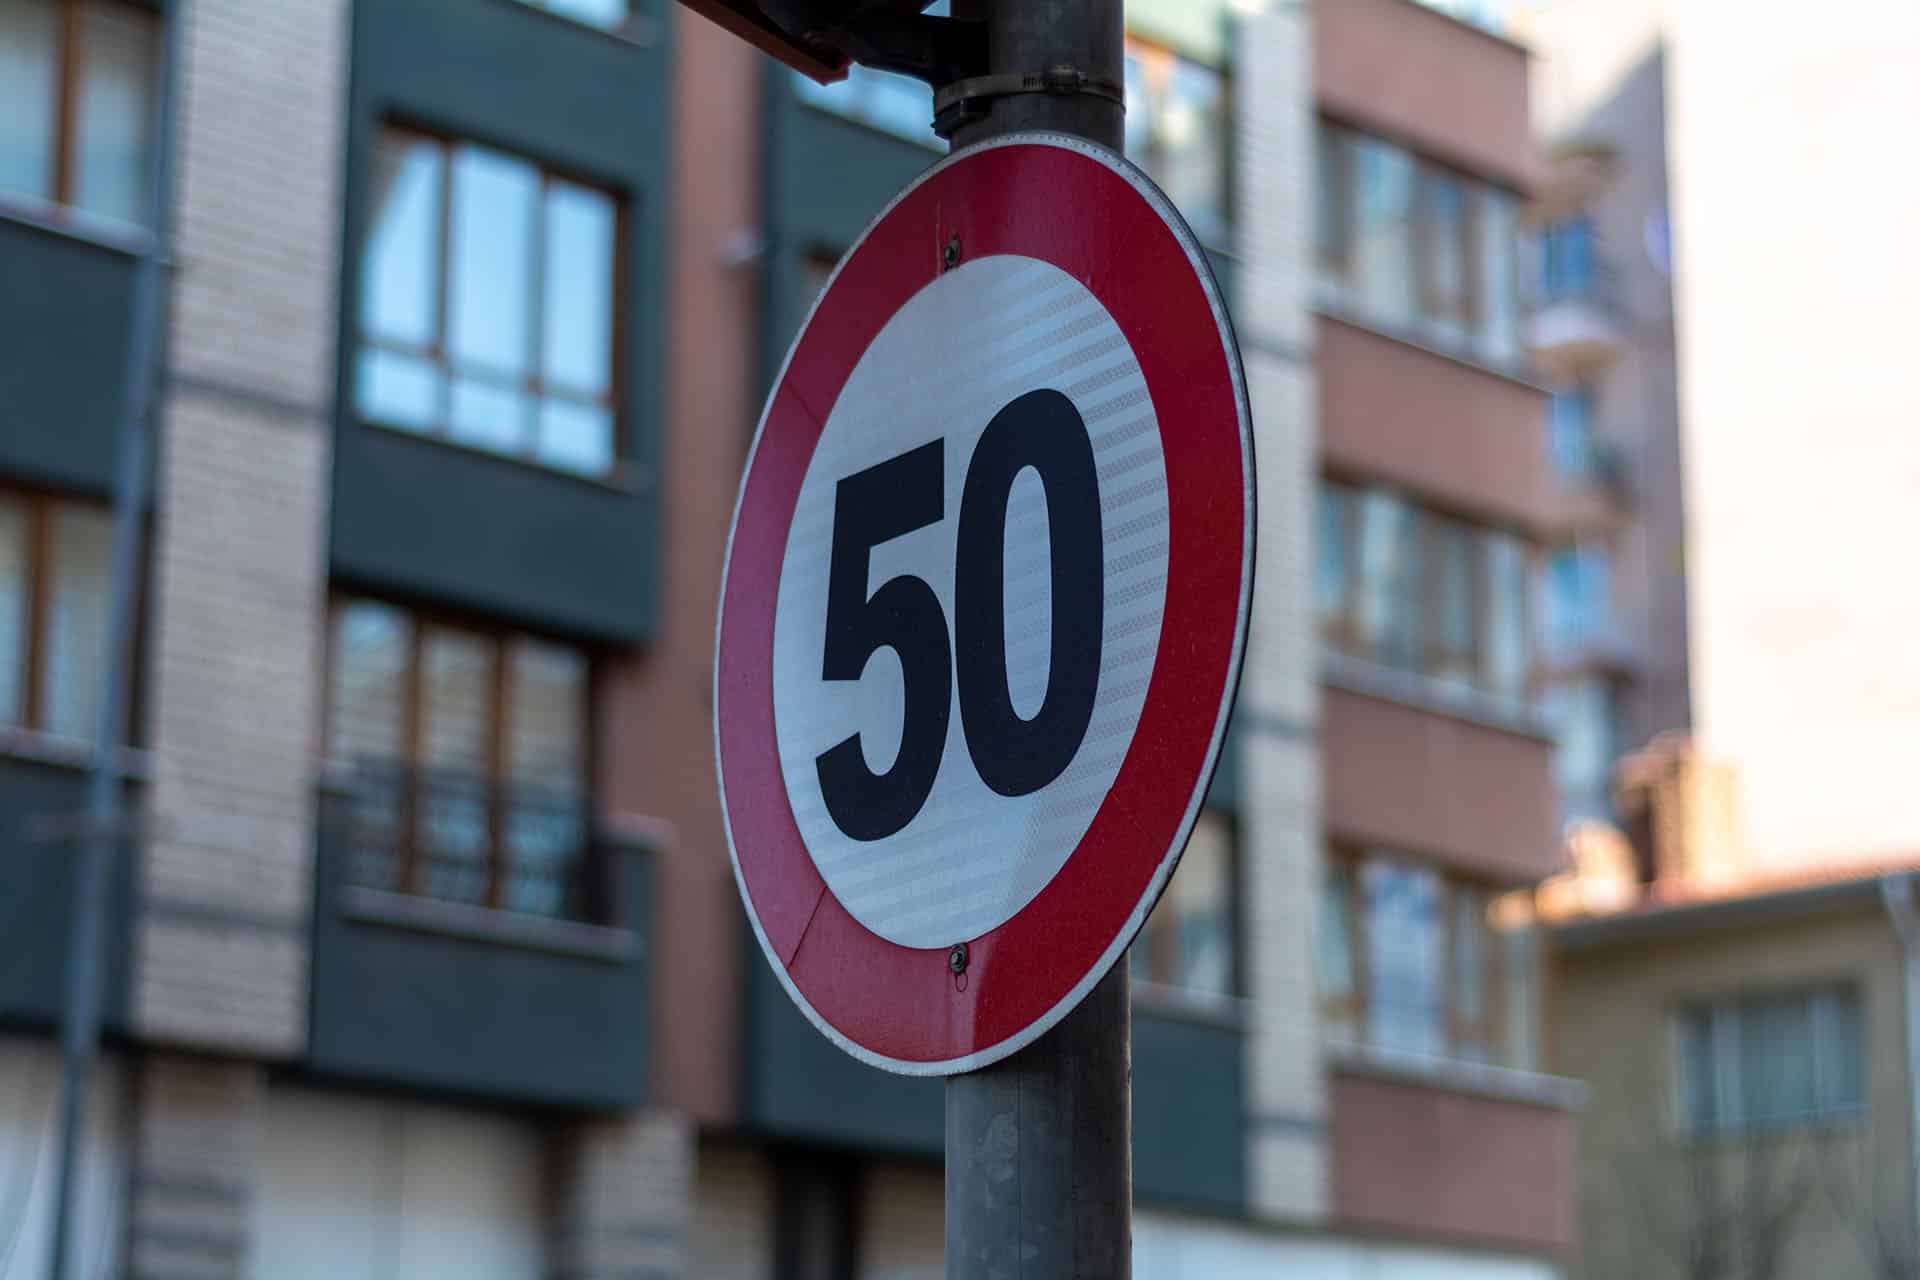 50 kilometers per hour speed limit sign.